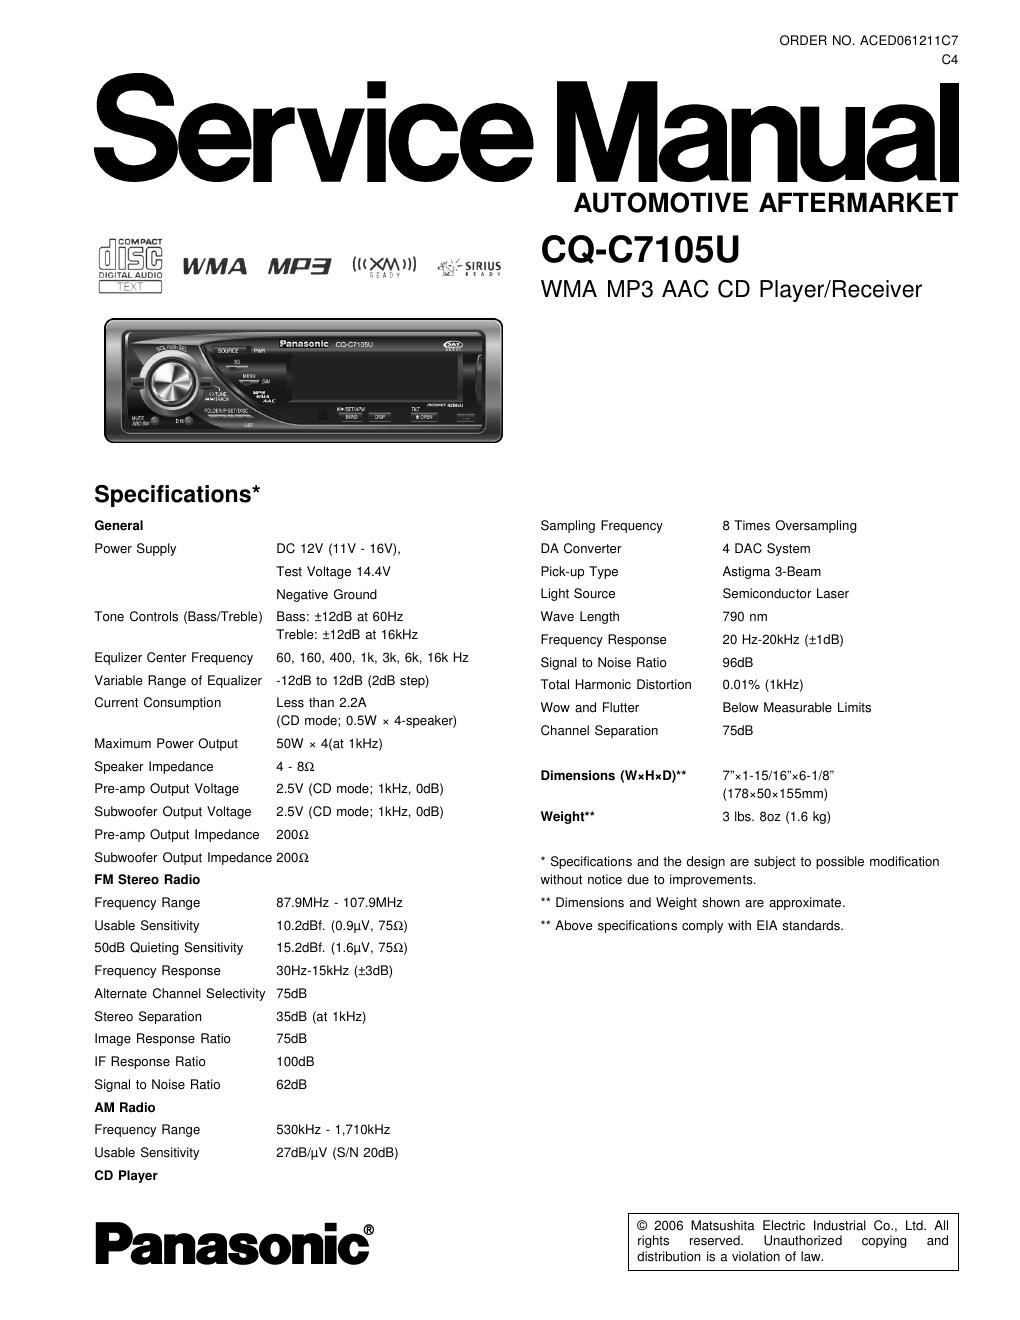 panasonic cq c 7105 u service manual